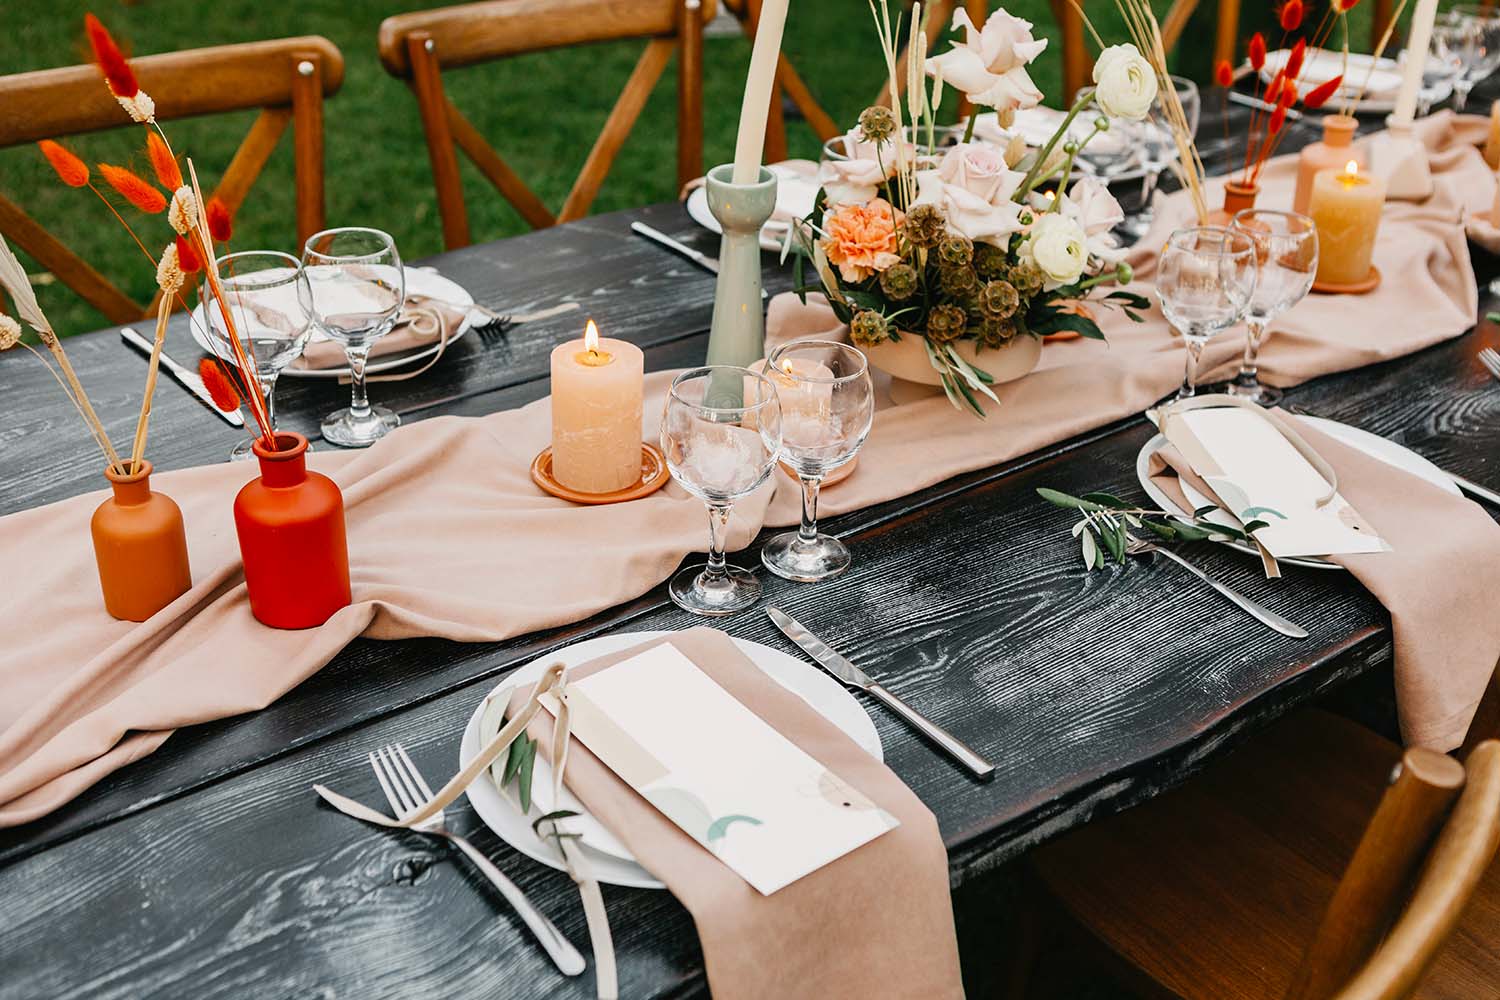 rustic-style-wedding-desk-decoration-and-setting-2021-09-01-16-40-47-utc